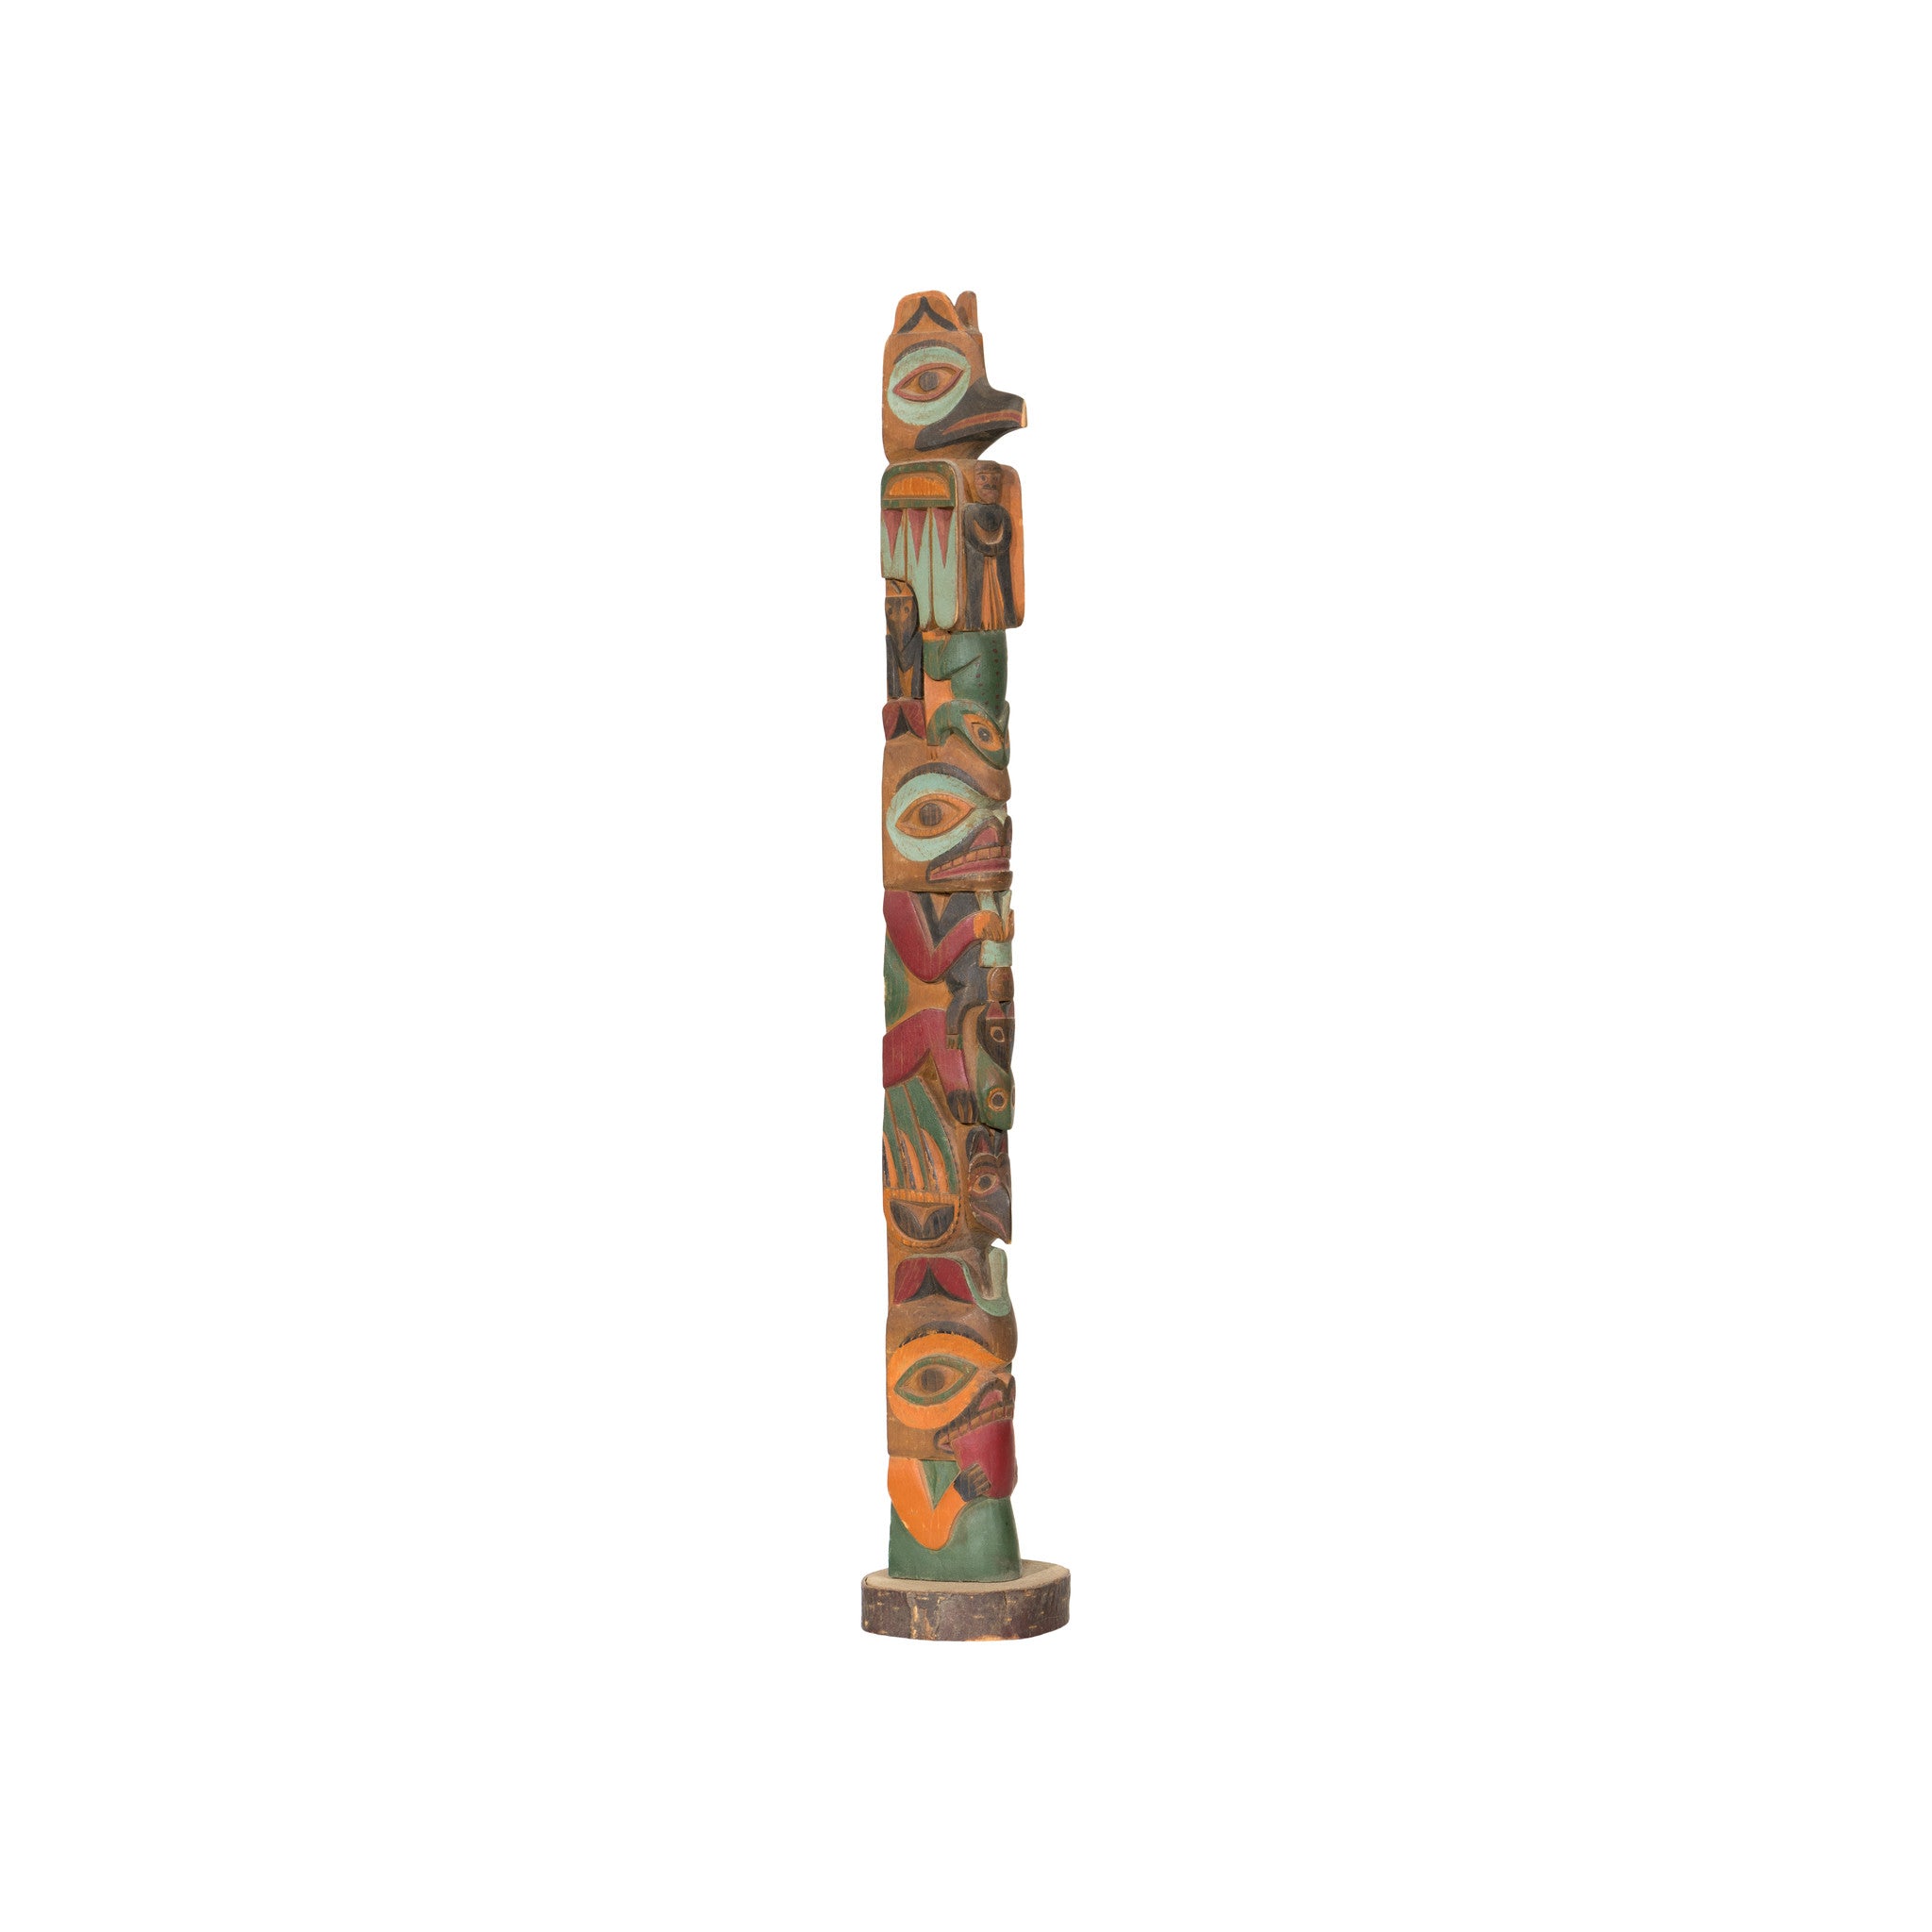 Nuu-chah-nulth Multifigure Totem by Sam Jackson